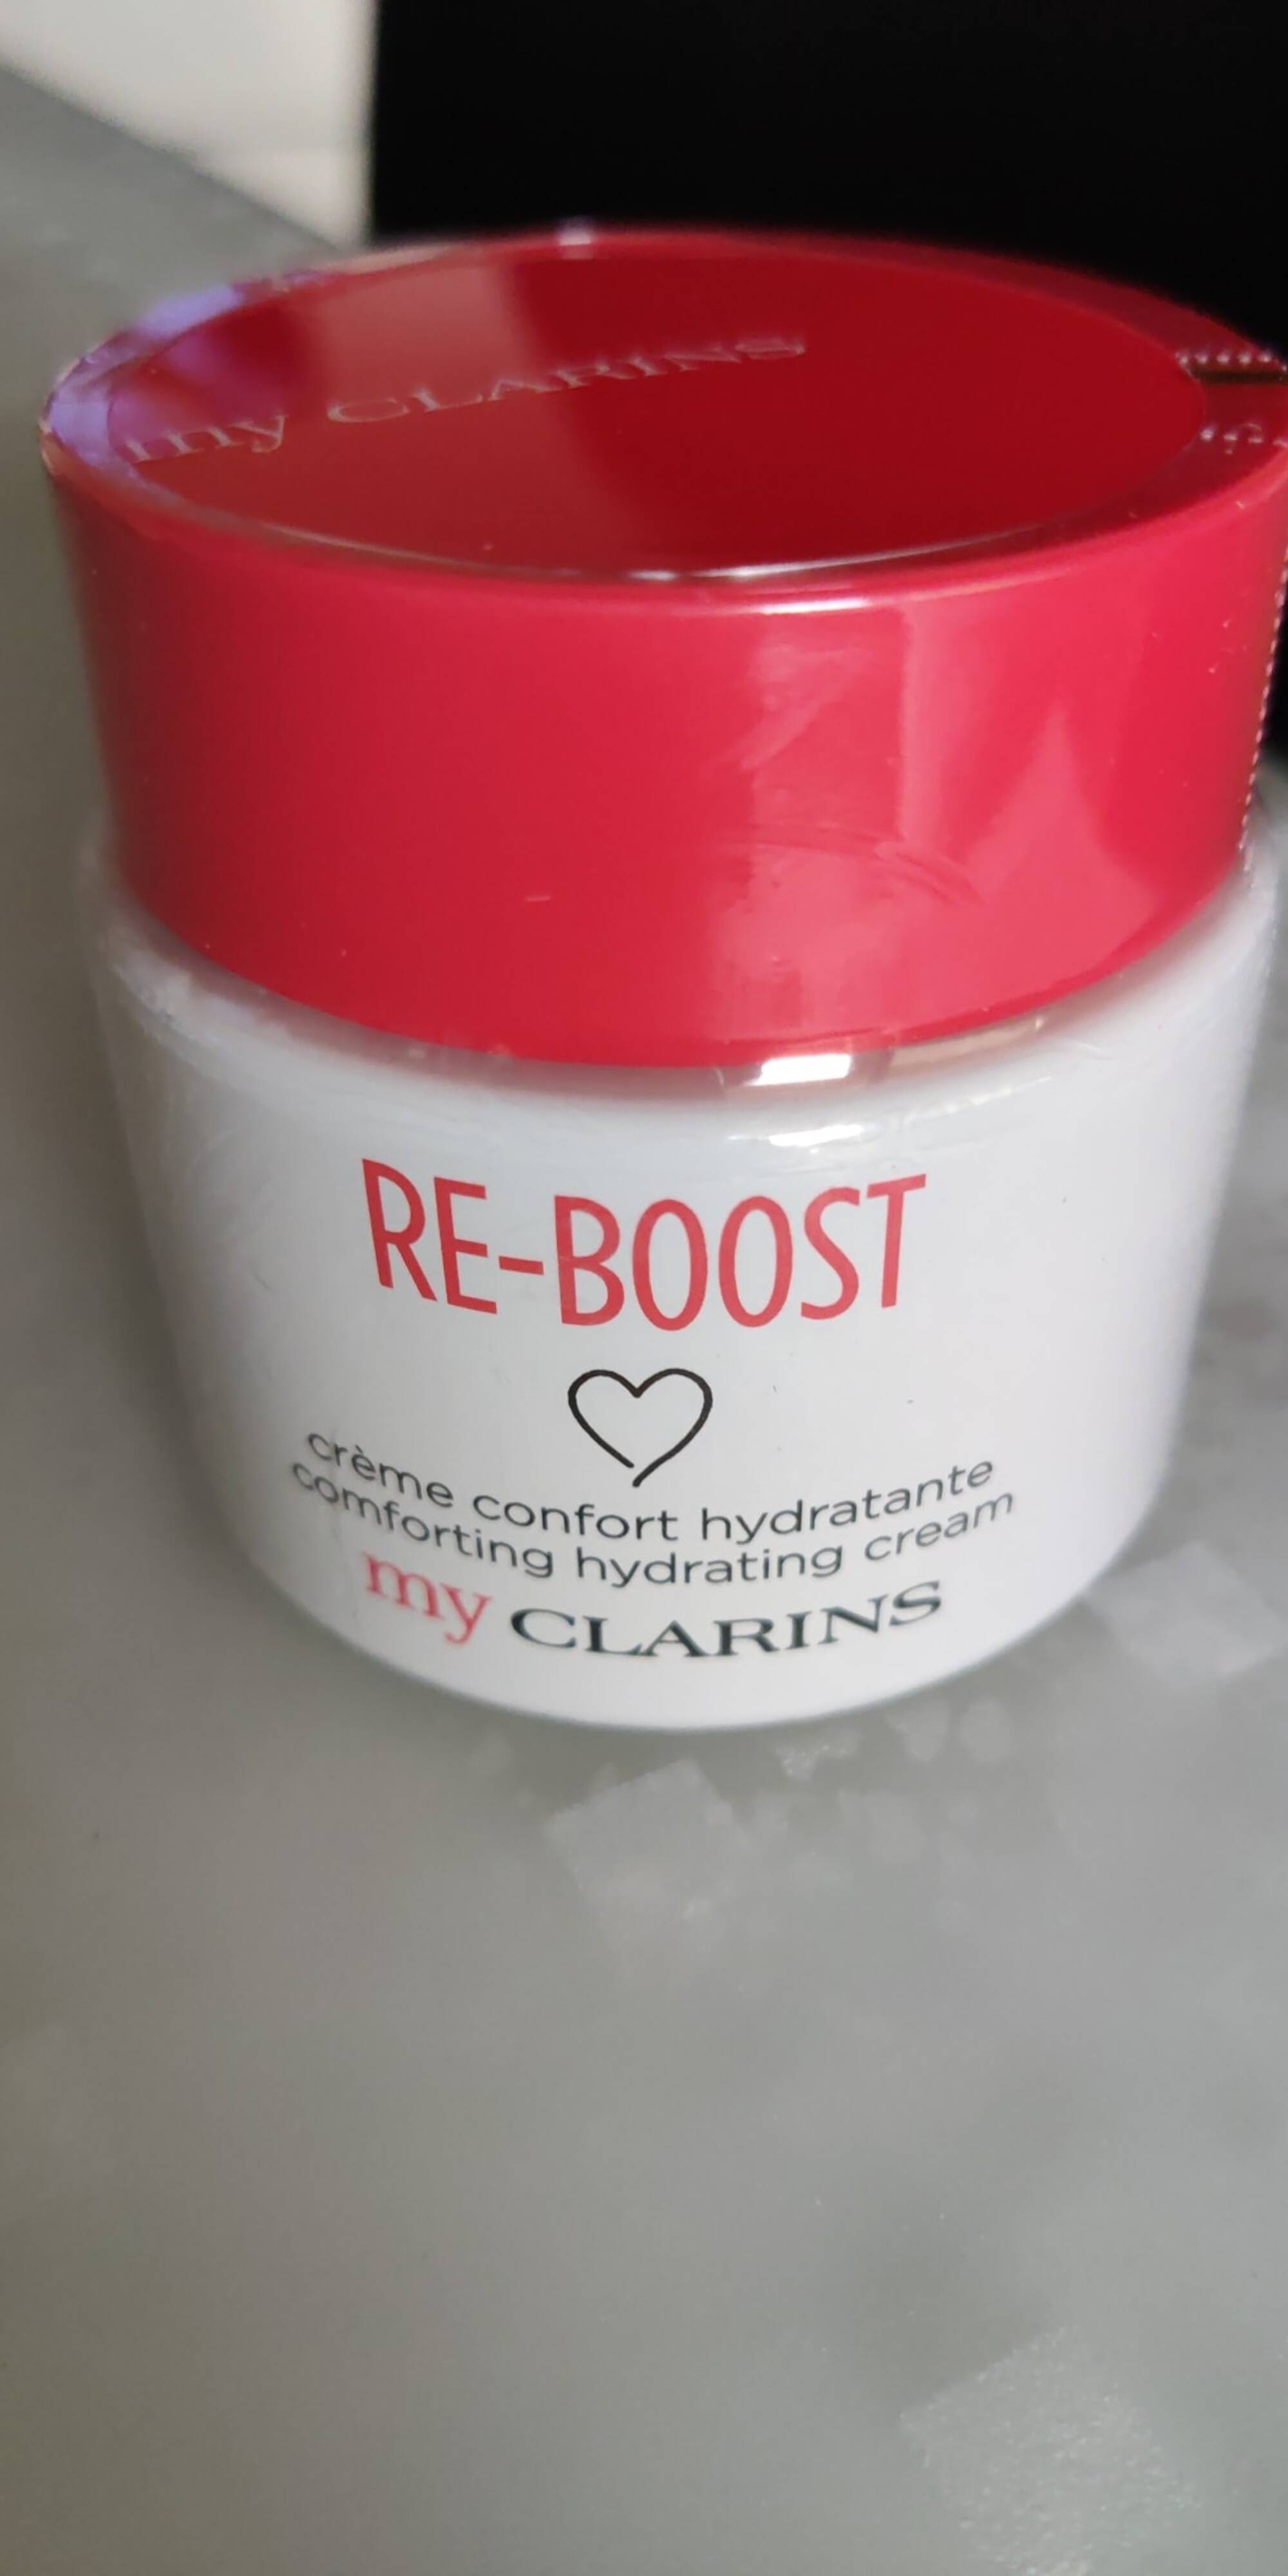 MY CLARINS - Re-Boost - Crème confort hydratante